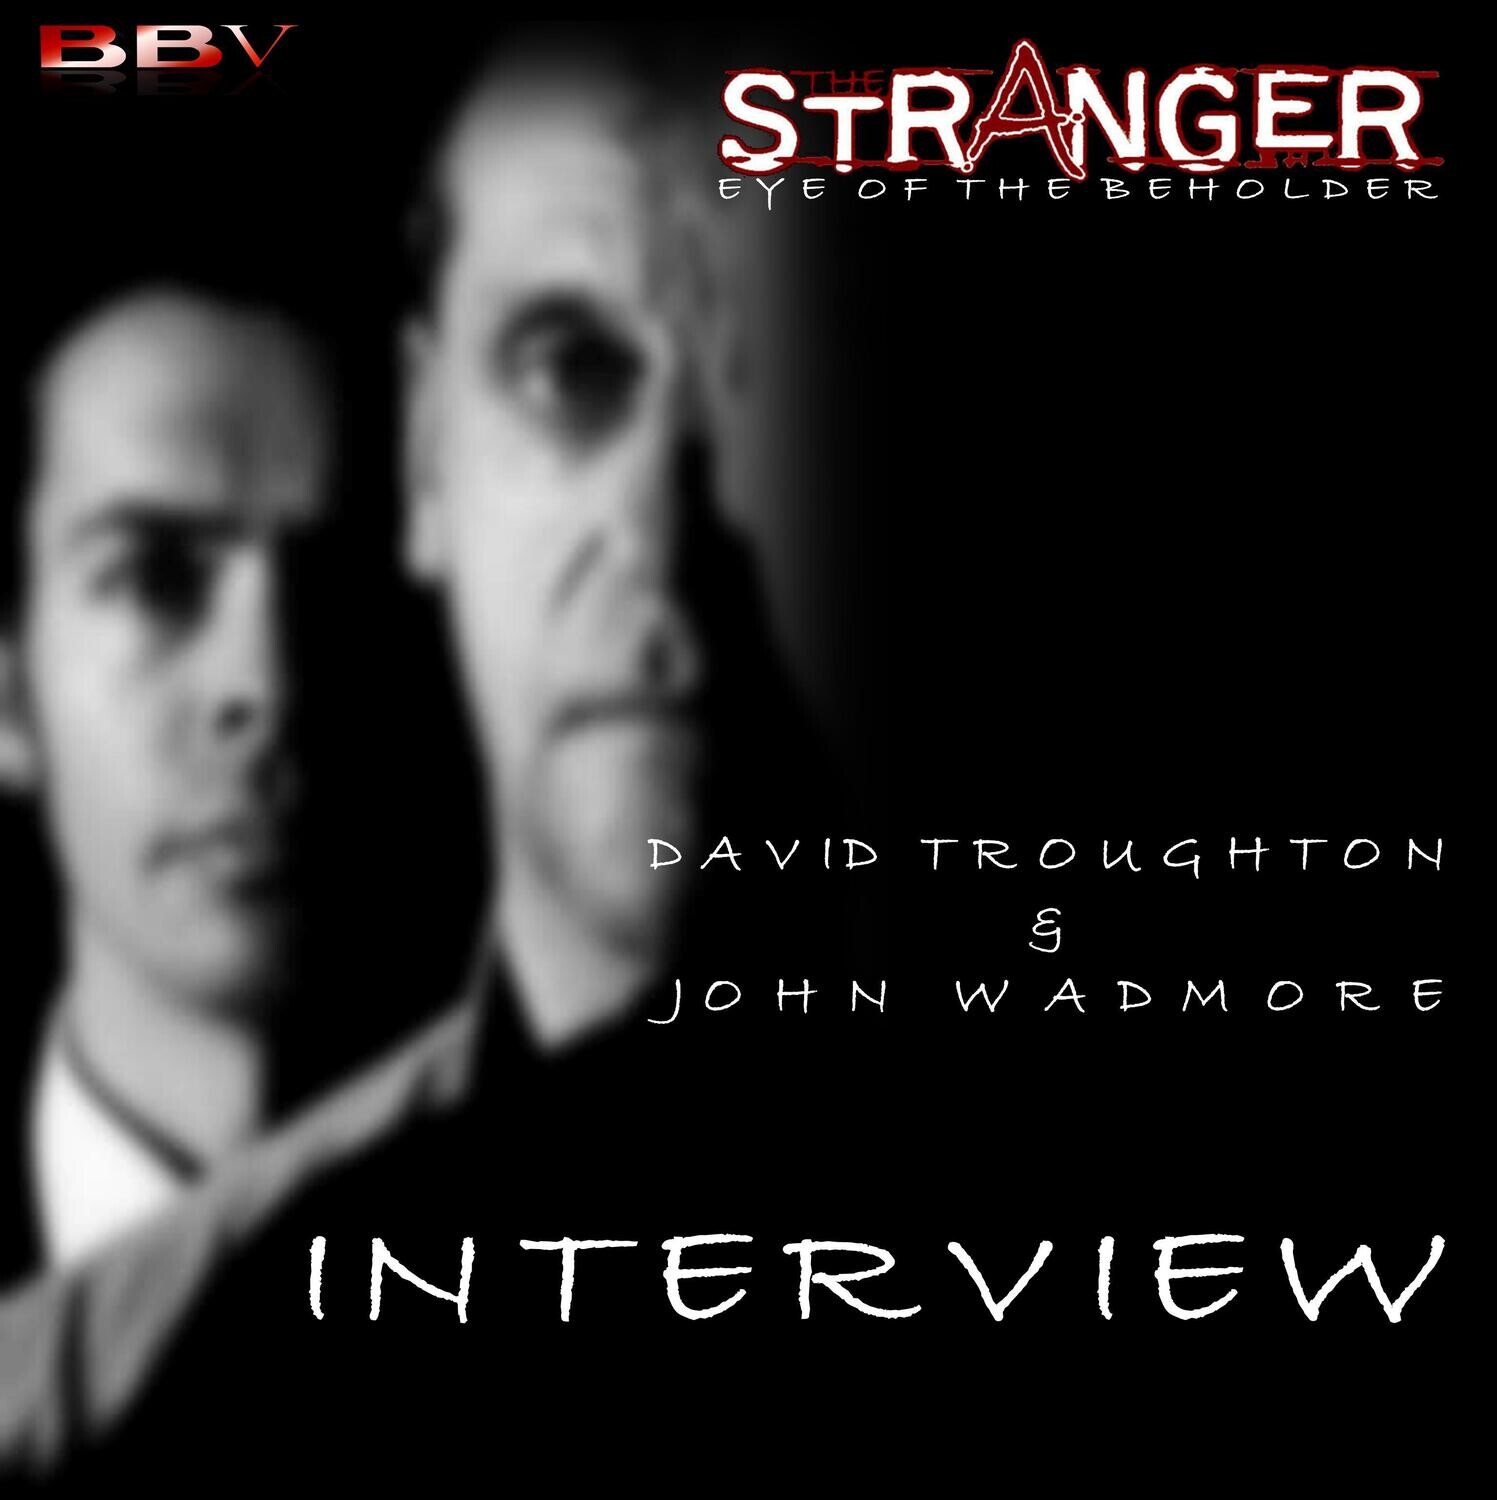 The Stranger: Eye of the Beholder - David Troughton & John Wadmore: Interview (DOWNLOAD)